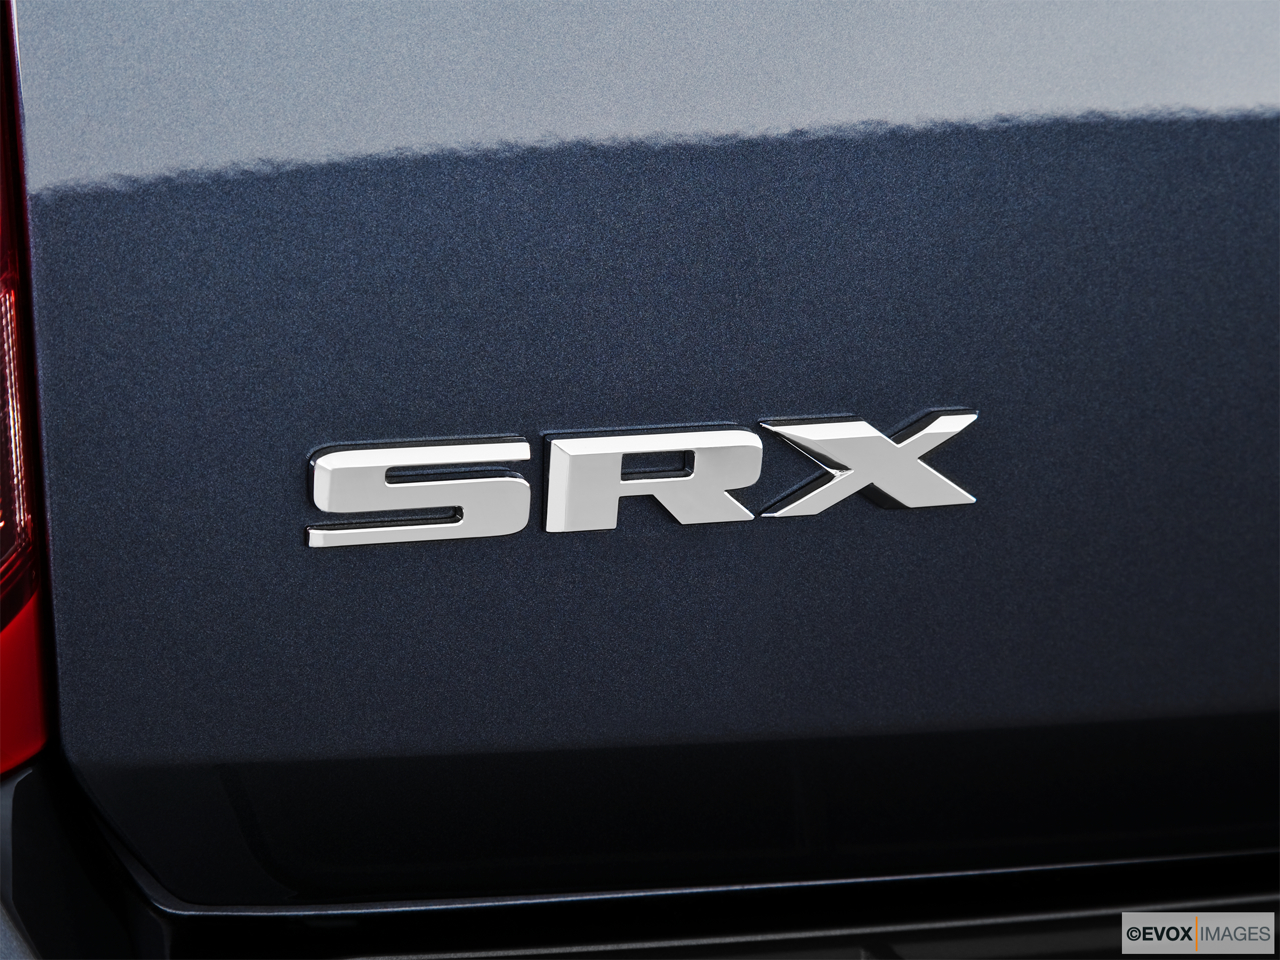 2010 Cadillac SRX Crossover Premium Collection Rear model badge/emblem 